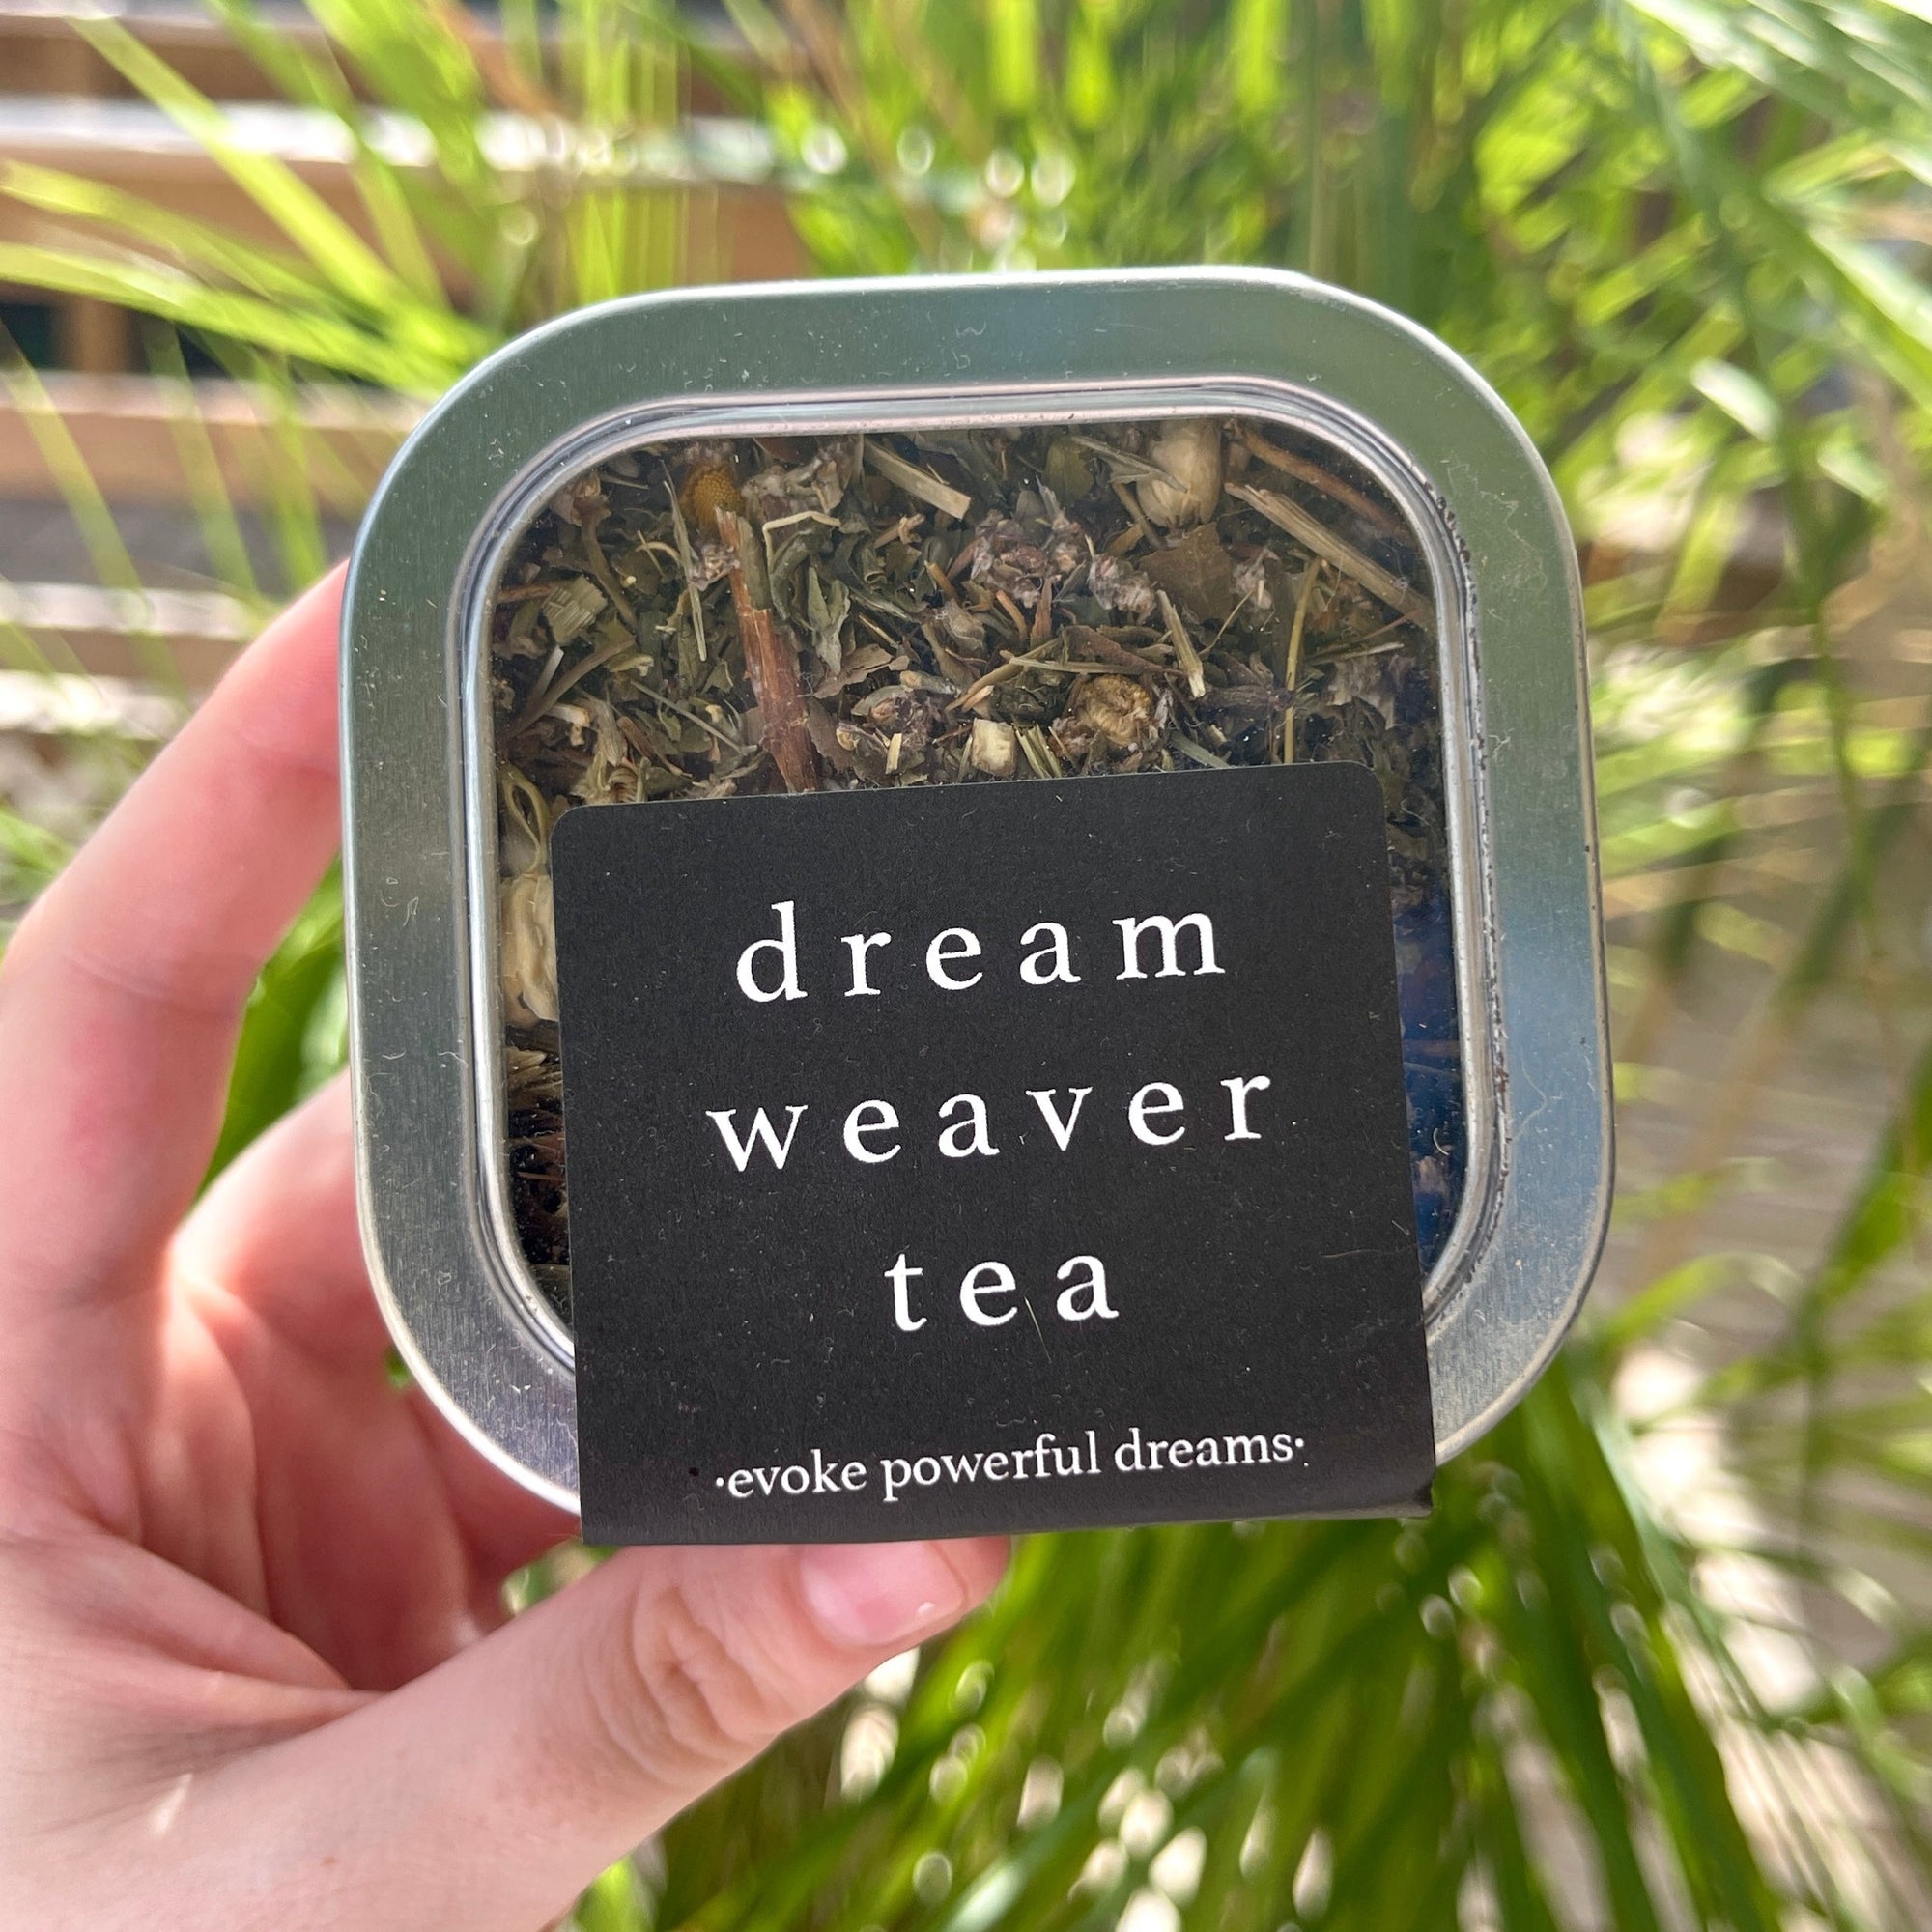 Dream Weaver Tea. Ingredients: mugwort, passion flower, catnip, hops flower, ginkgo, oat straw, peppermint, lemon balm, jasmine, and chamomile.